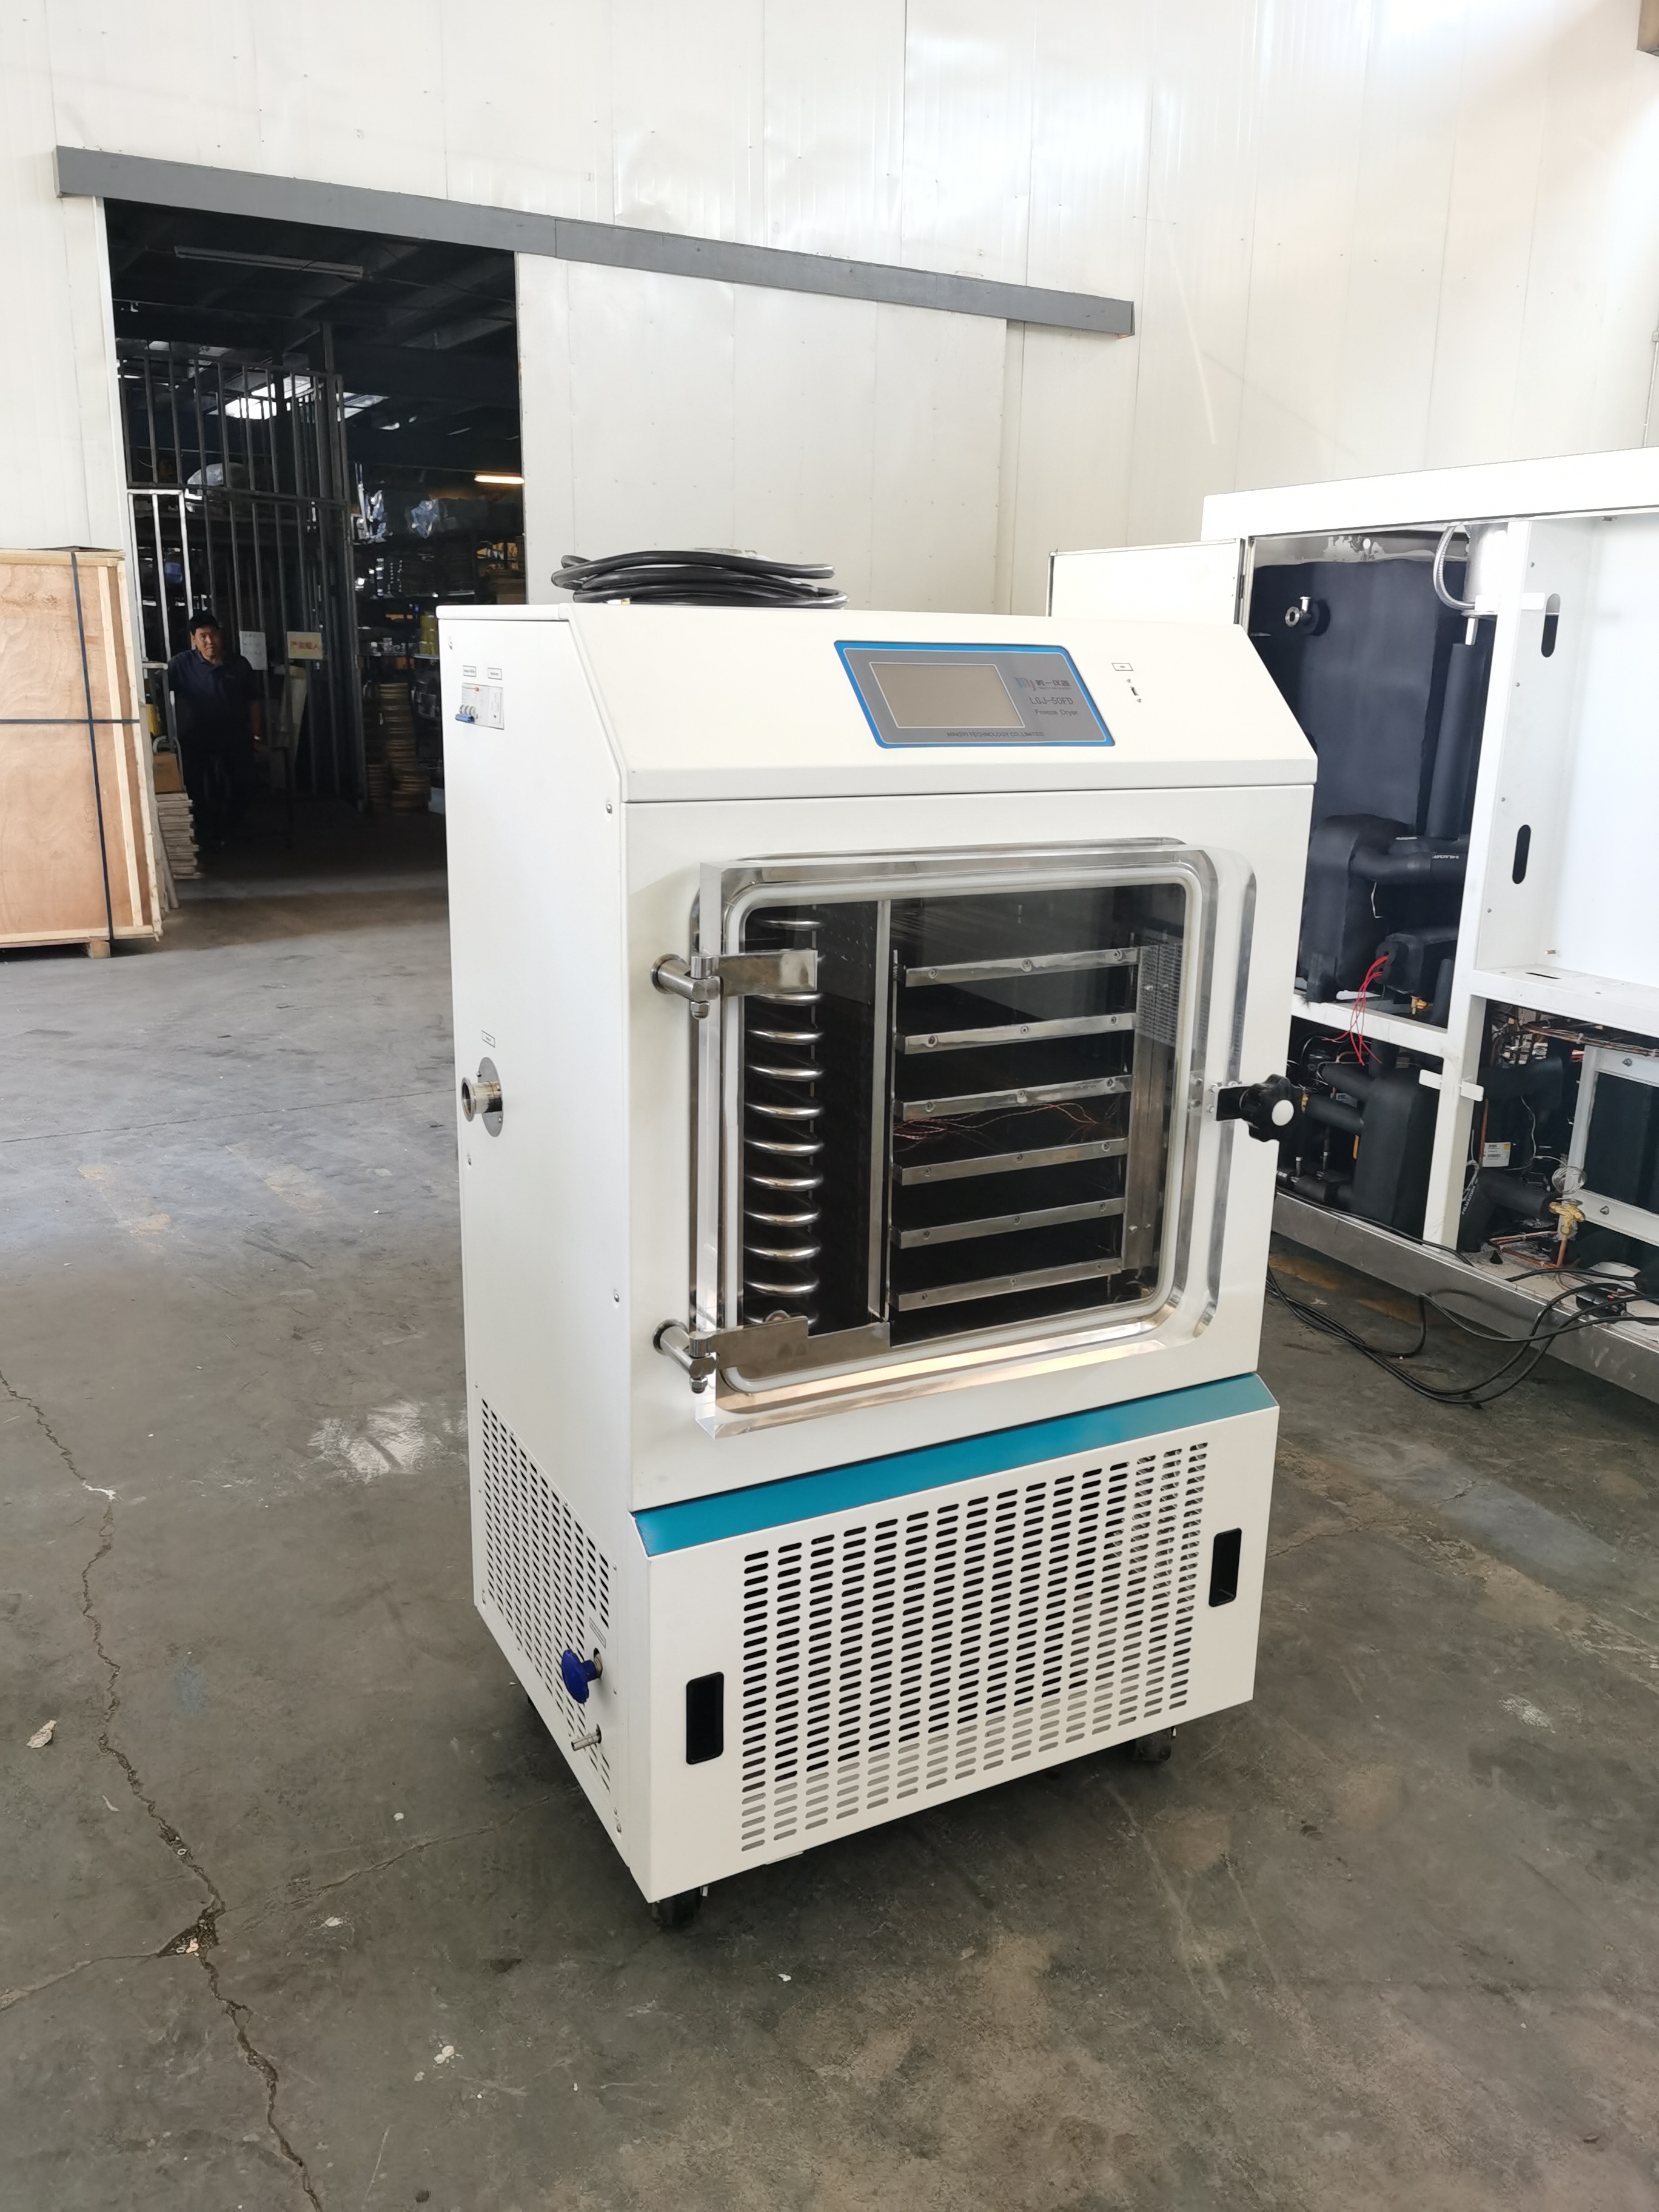 LGJ-50FD (0.6㎡) Electric-Heating Freeze Dryer